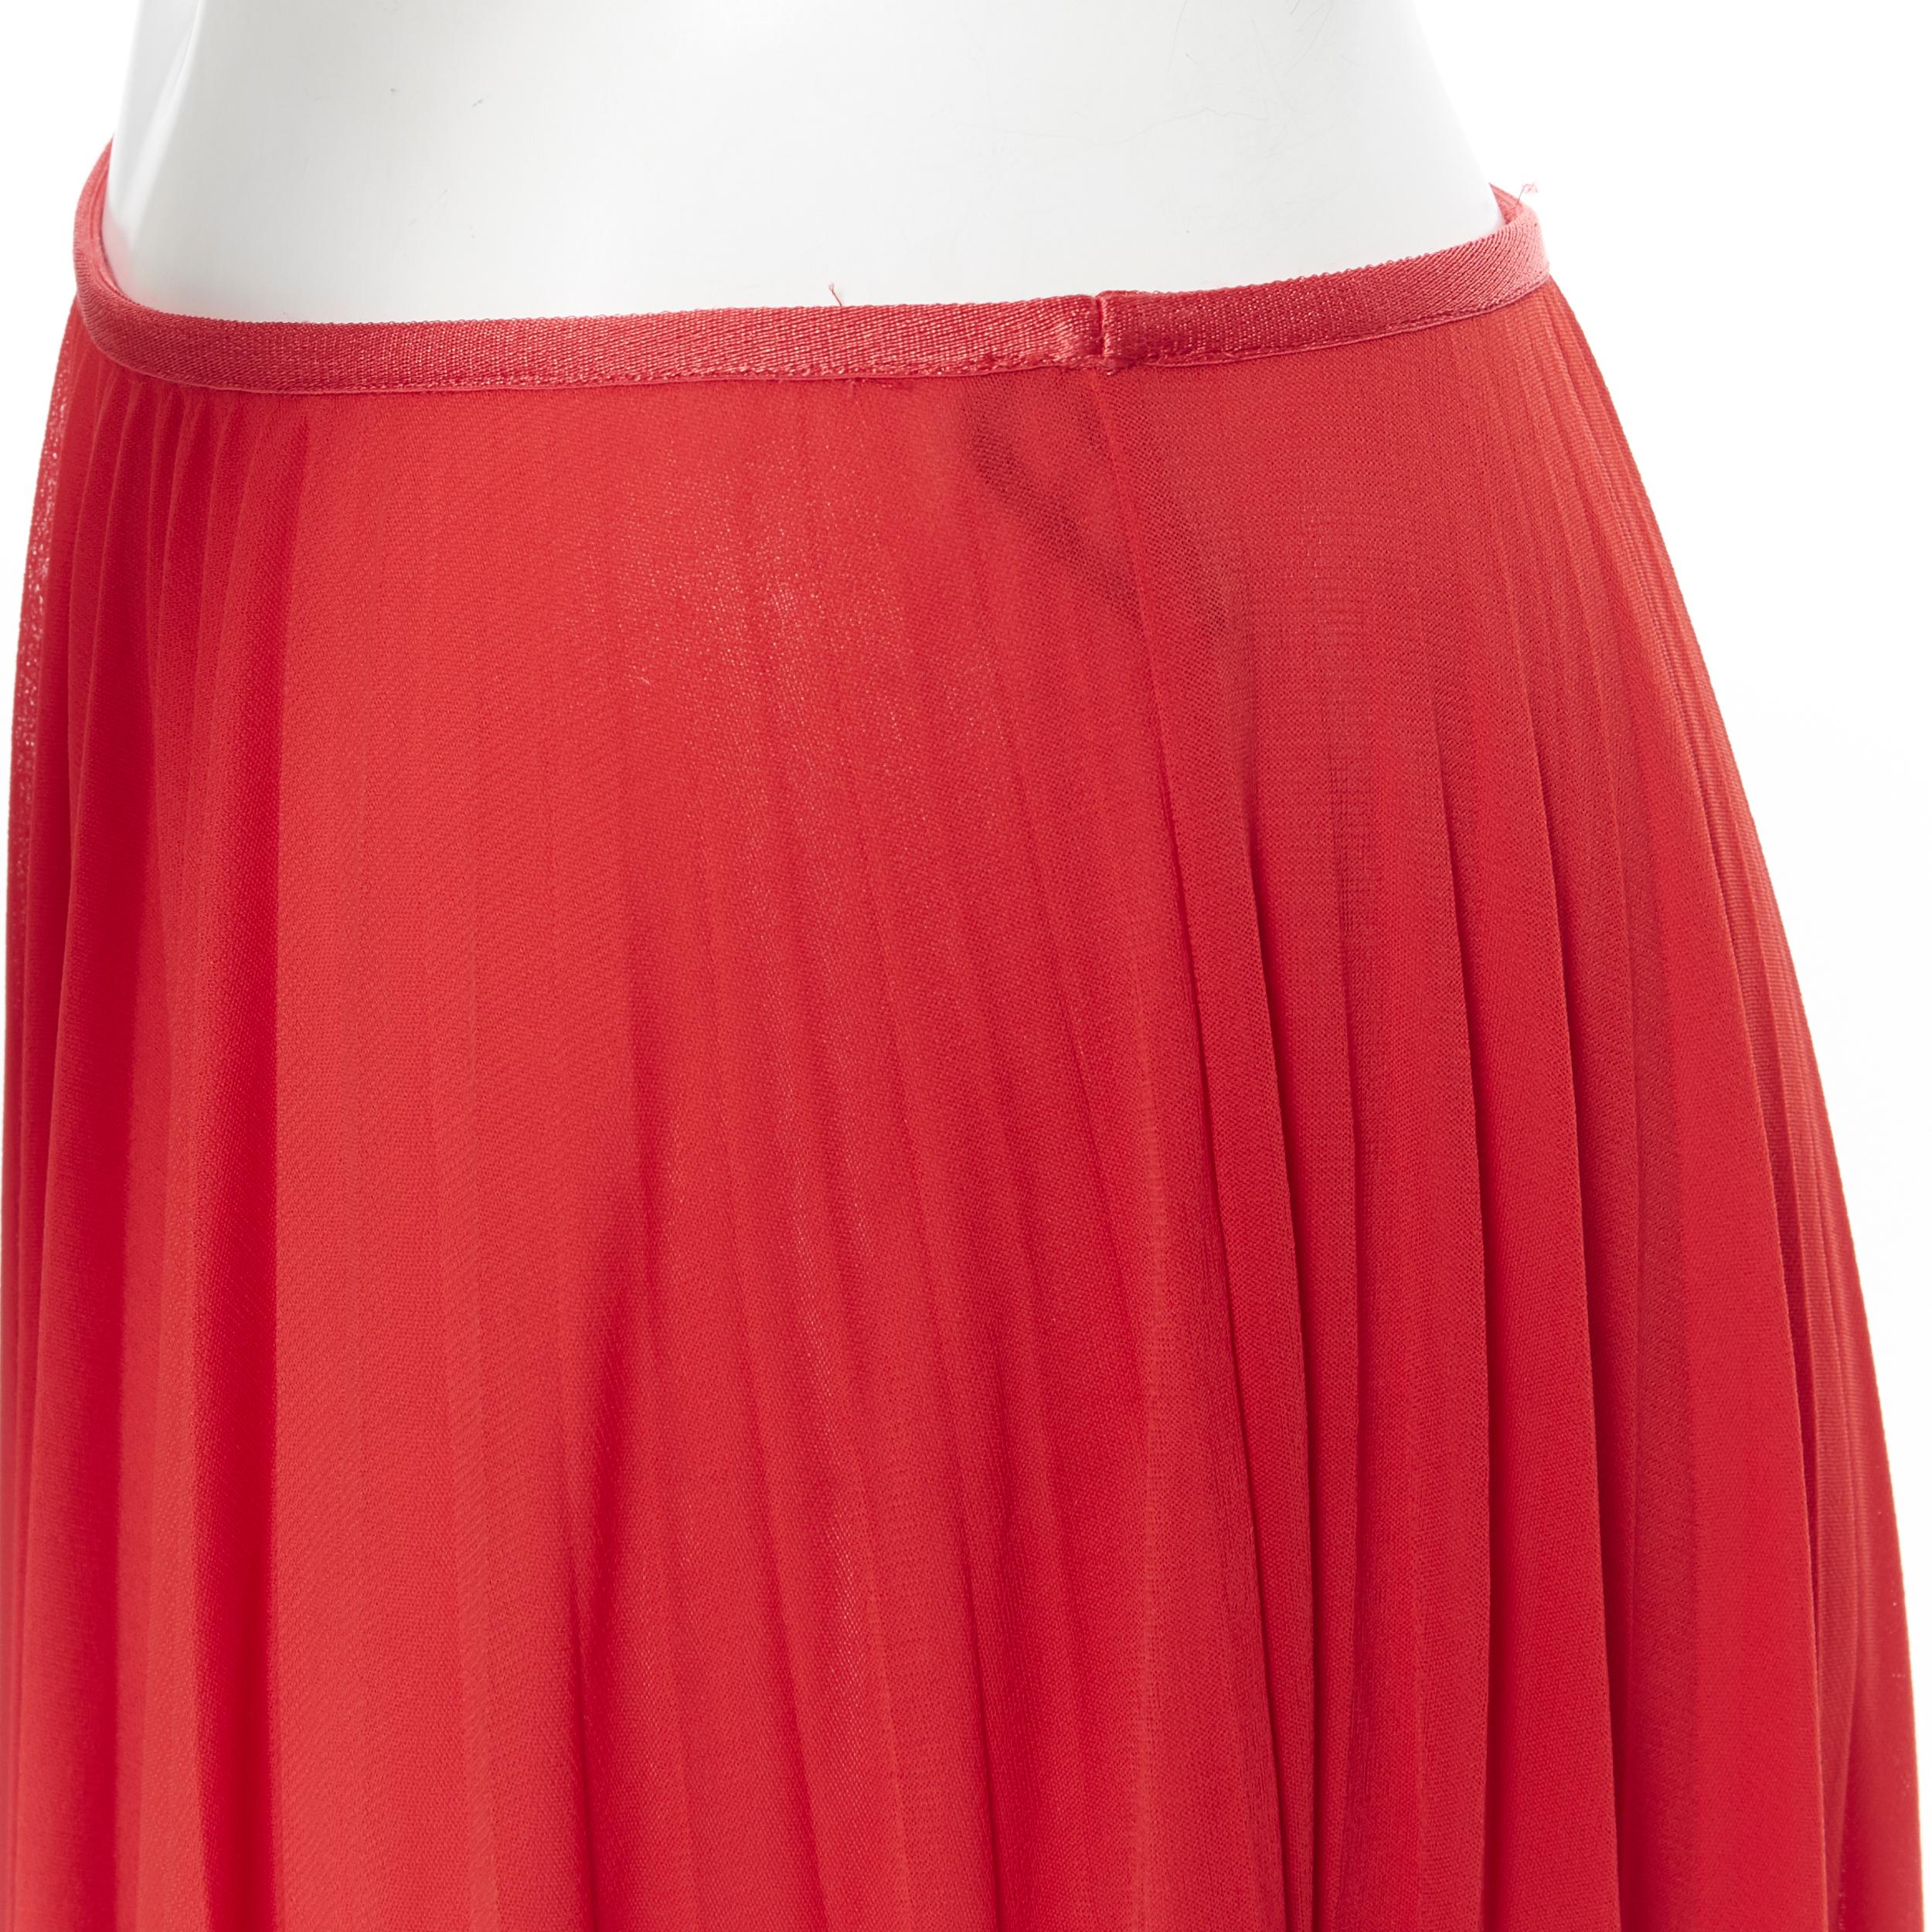 OLD CELINE PHOEBE PHILO 100% polyester poppy red pleated raw cut hem skirt FR36 1